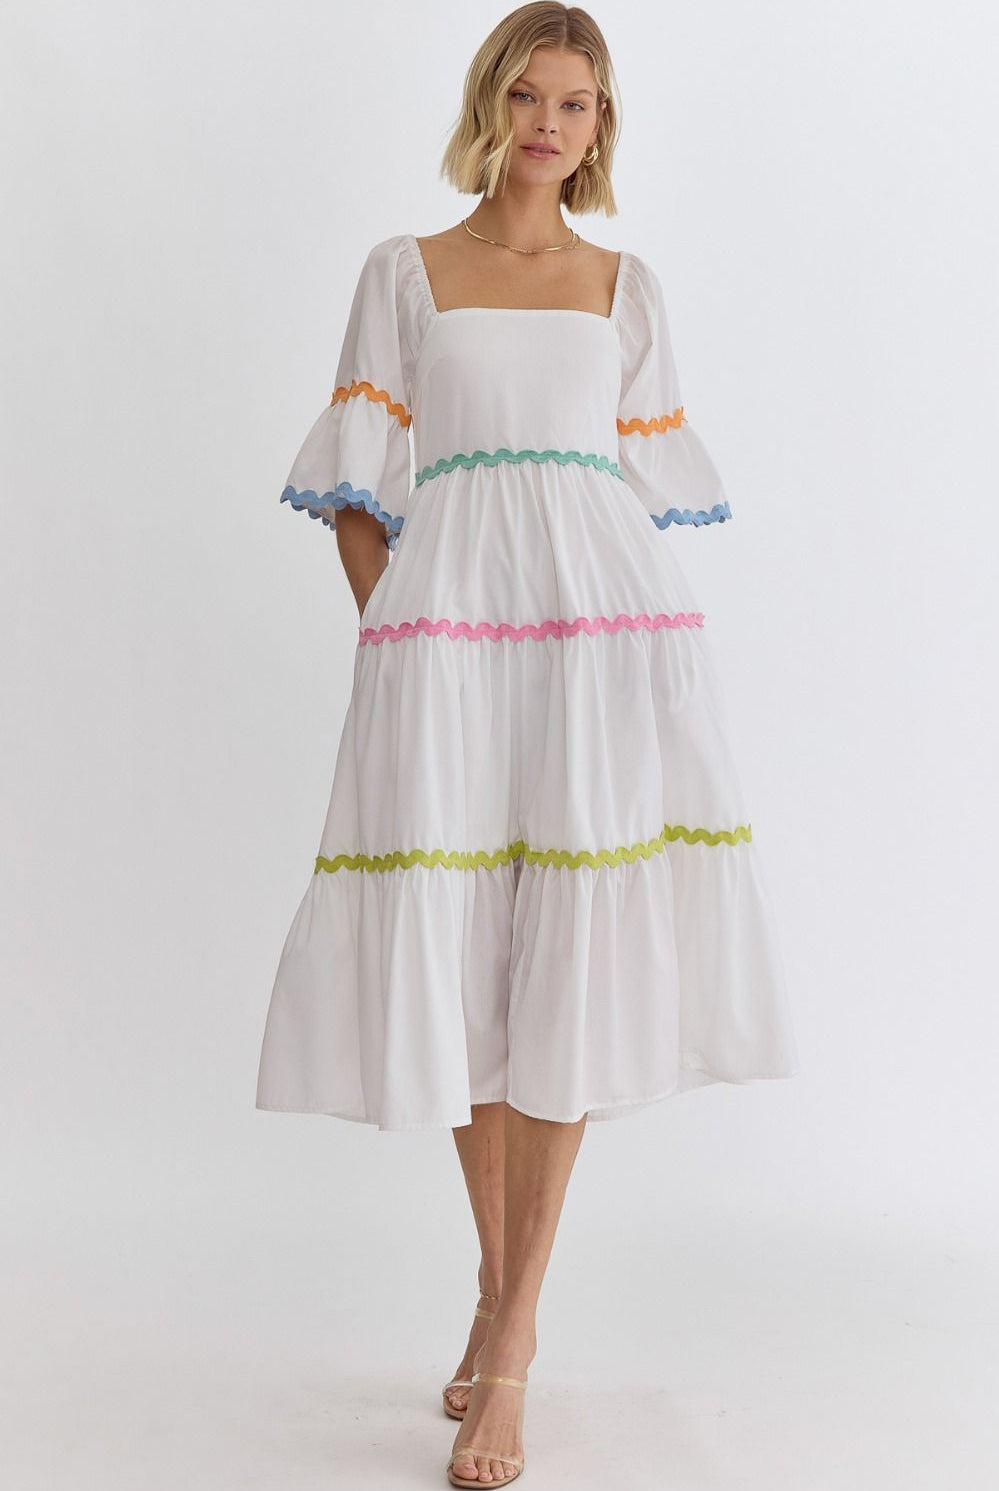 Sarah Short Sleeve Rick Rack Tiered Midi Dress - Be You Boutique